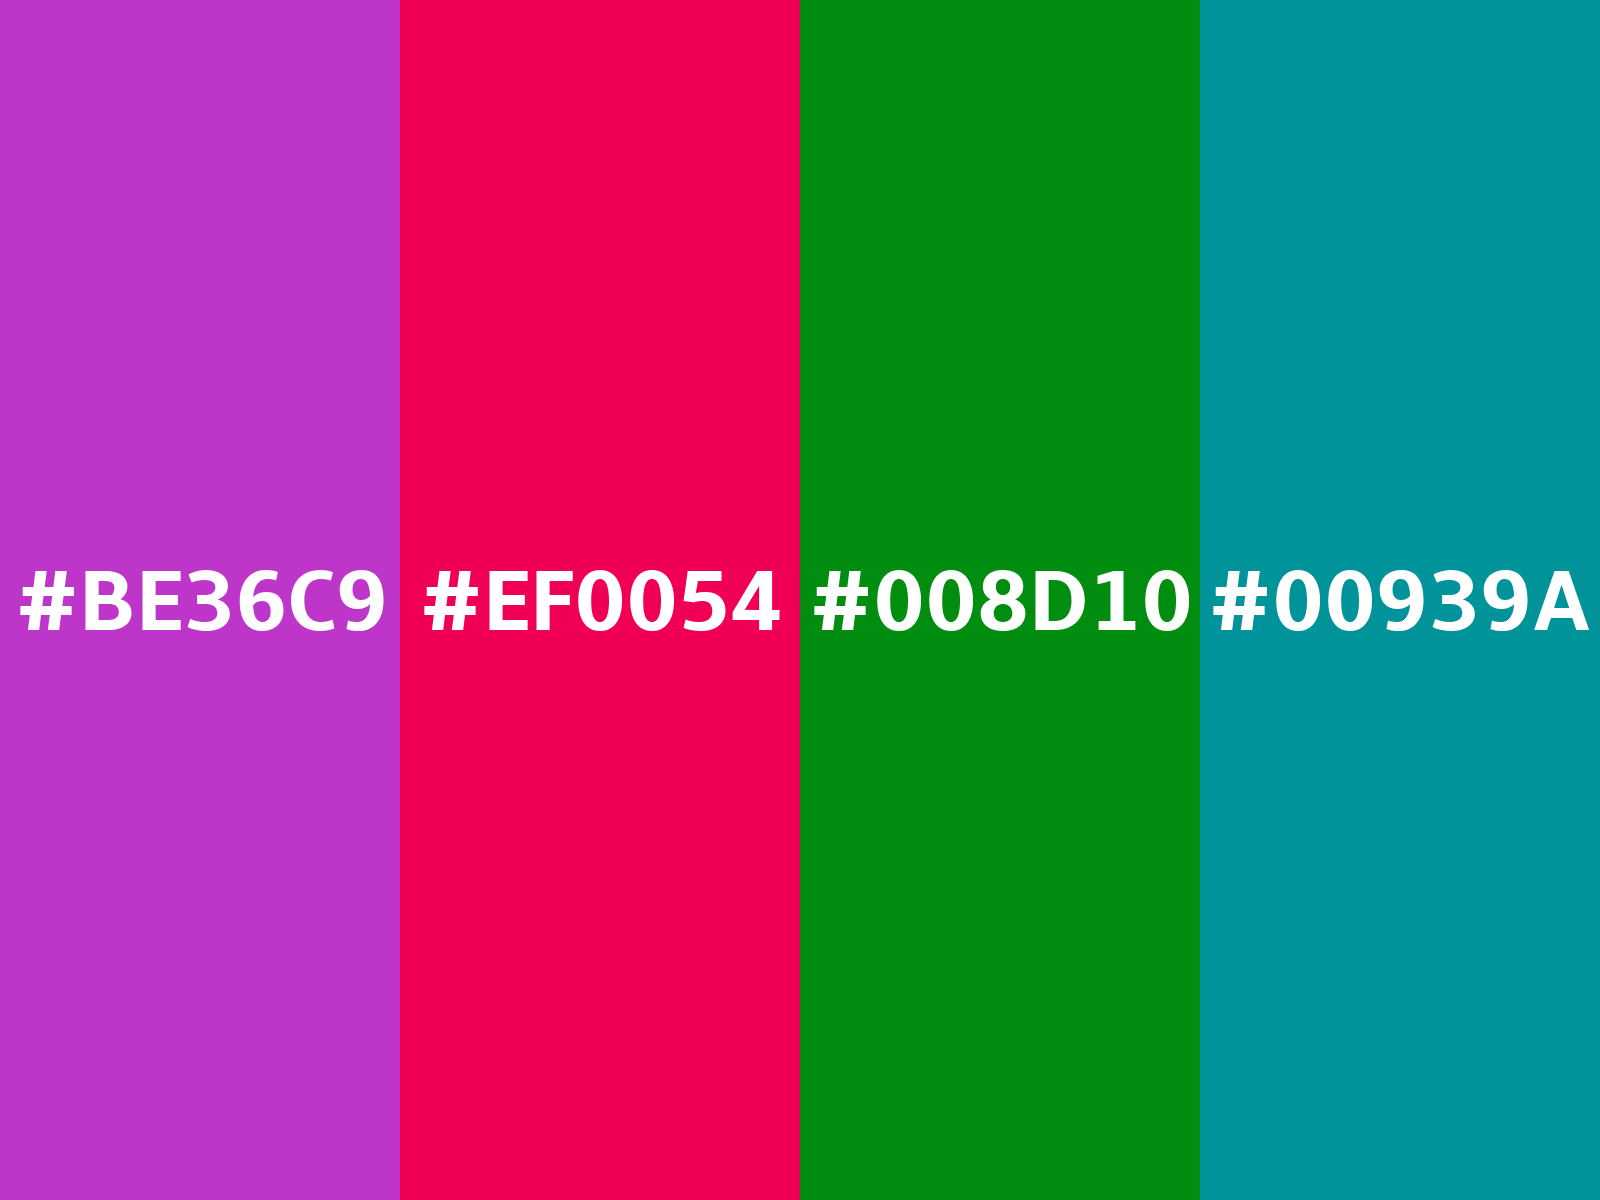 152111 Hex Color, RGB: 21, 33, 17